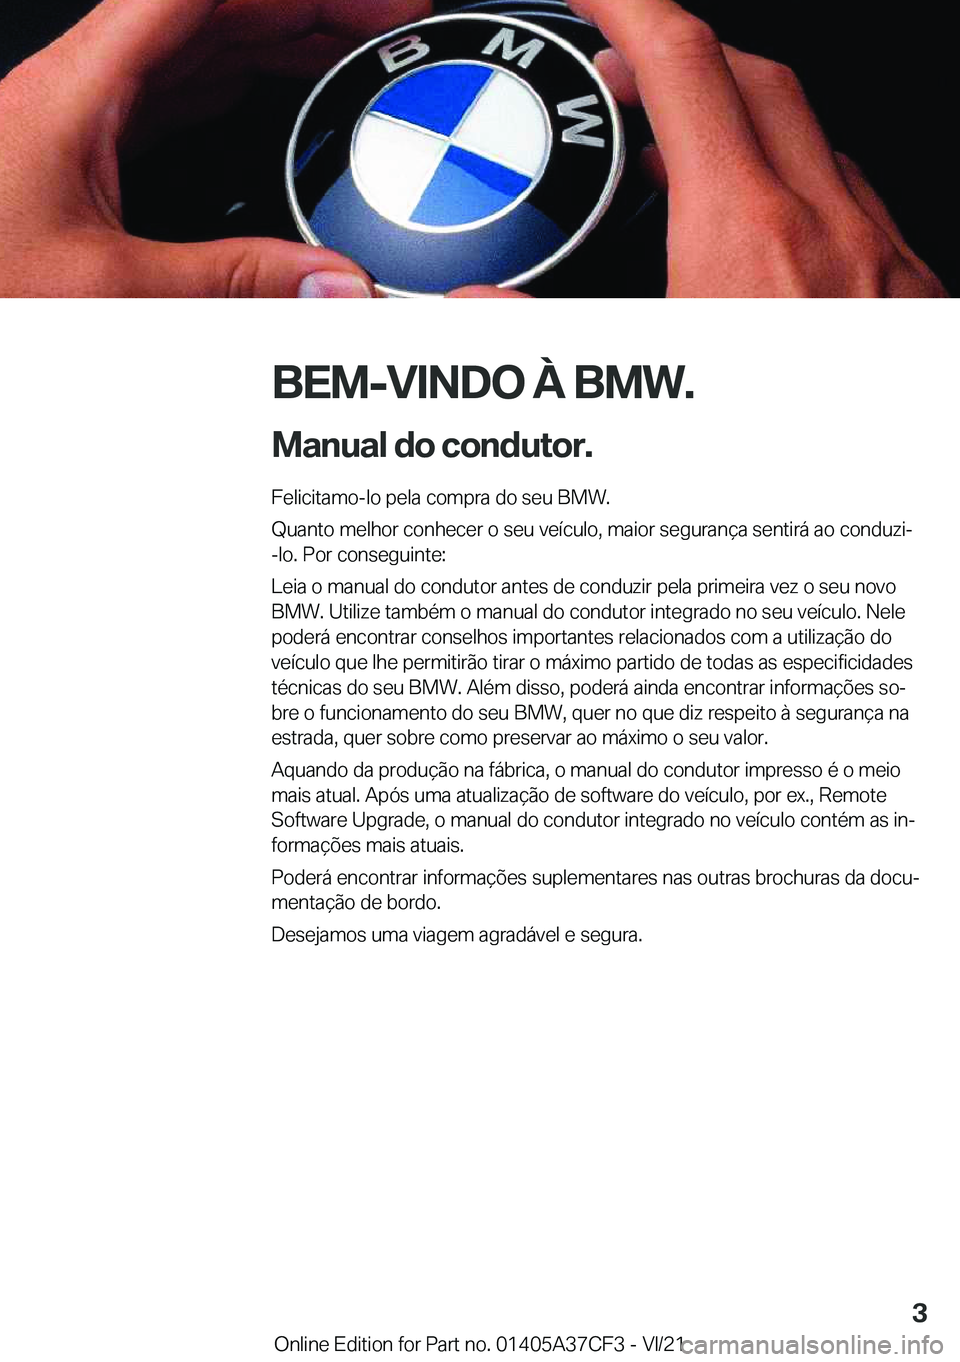 BMW X5 2022  Manual do condutor (in Portuguese) �B�E�M�-�V�I�N�D�O��À��B�M�W�.
�M�a�n�u�a�l��d�o��c�o�n�d�u�t�o�r�. �F�e�l�i�c�i�t�a�m�o�-�l�o��p�e�l�a��c�o�m�p�r�a��d�o��s�e�u��B�M�W�.
�Q�u�a�n�t�o��m�e�l�h�o�r��c�o�n�h�e�c�e�r��o��s